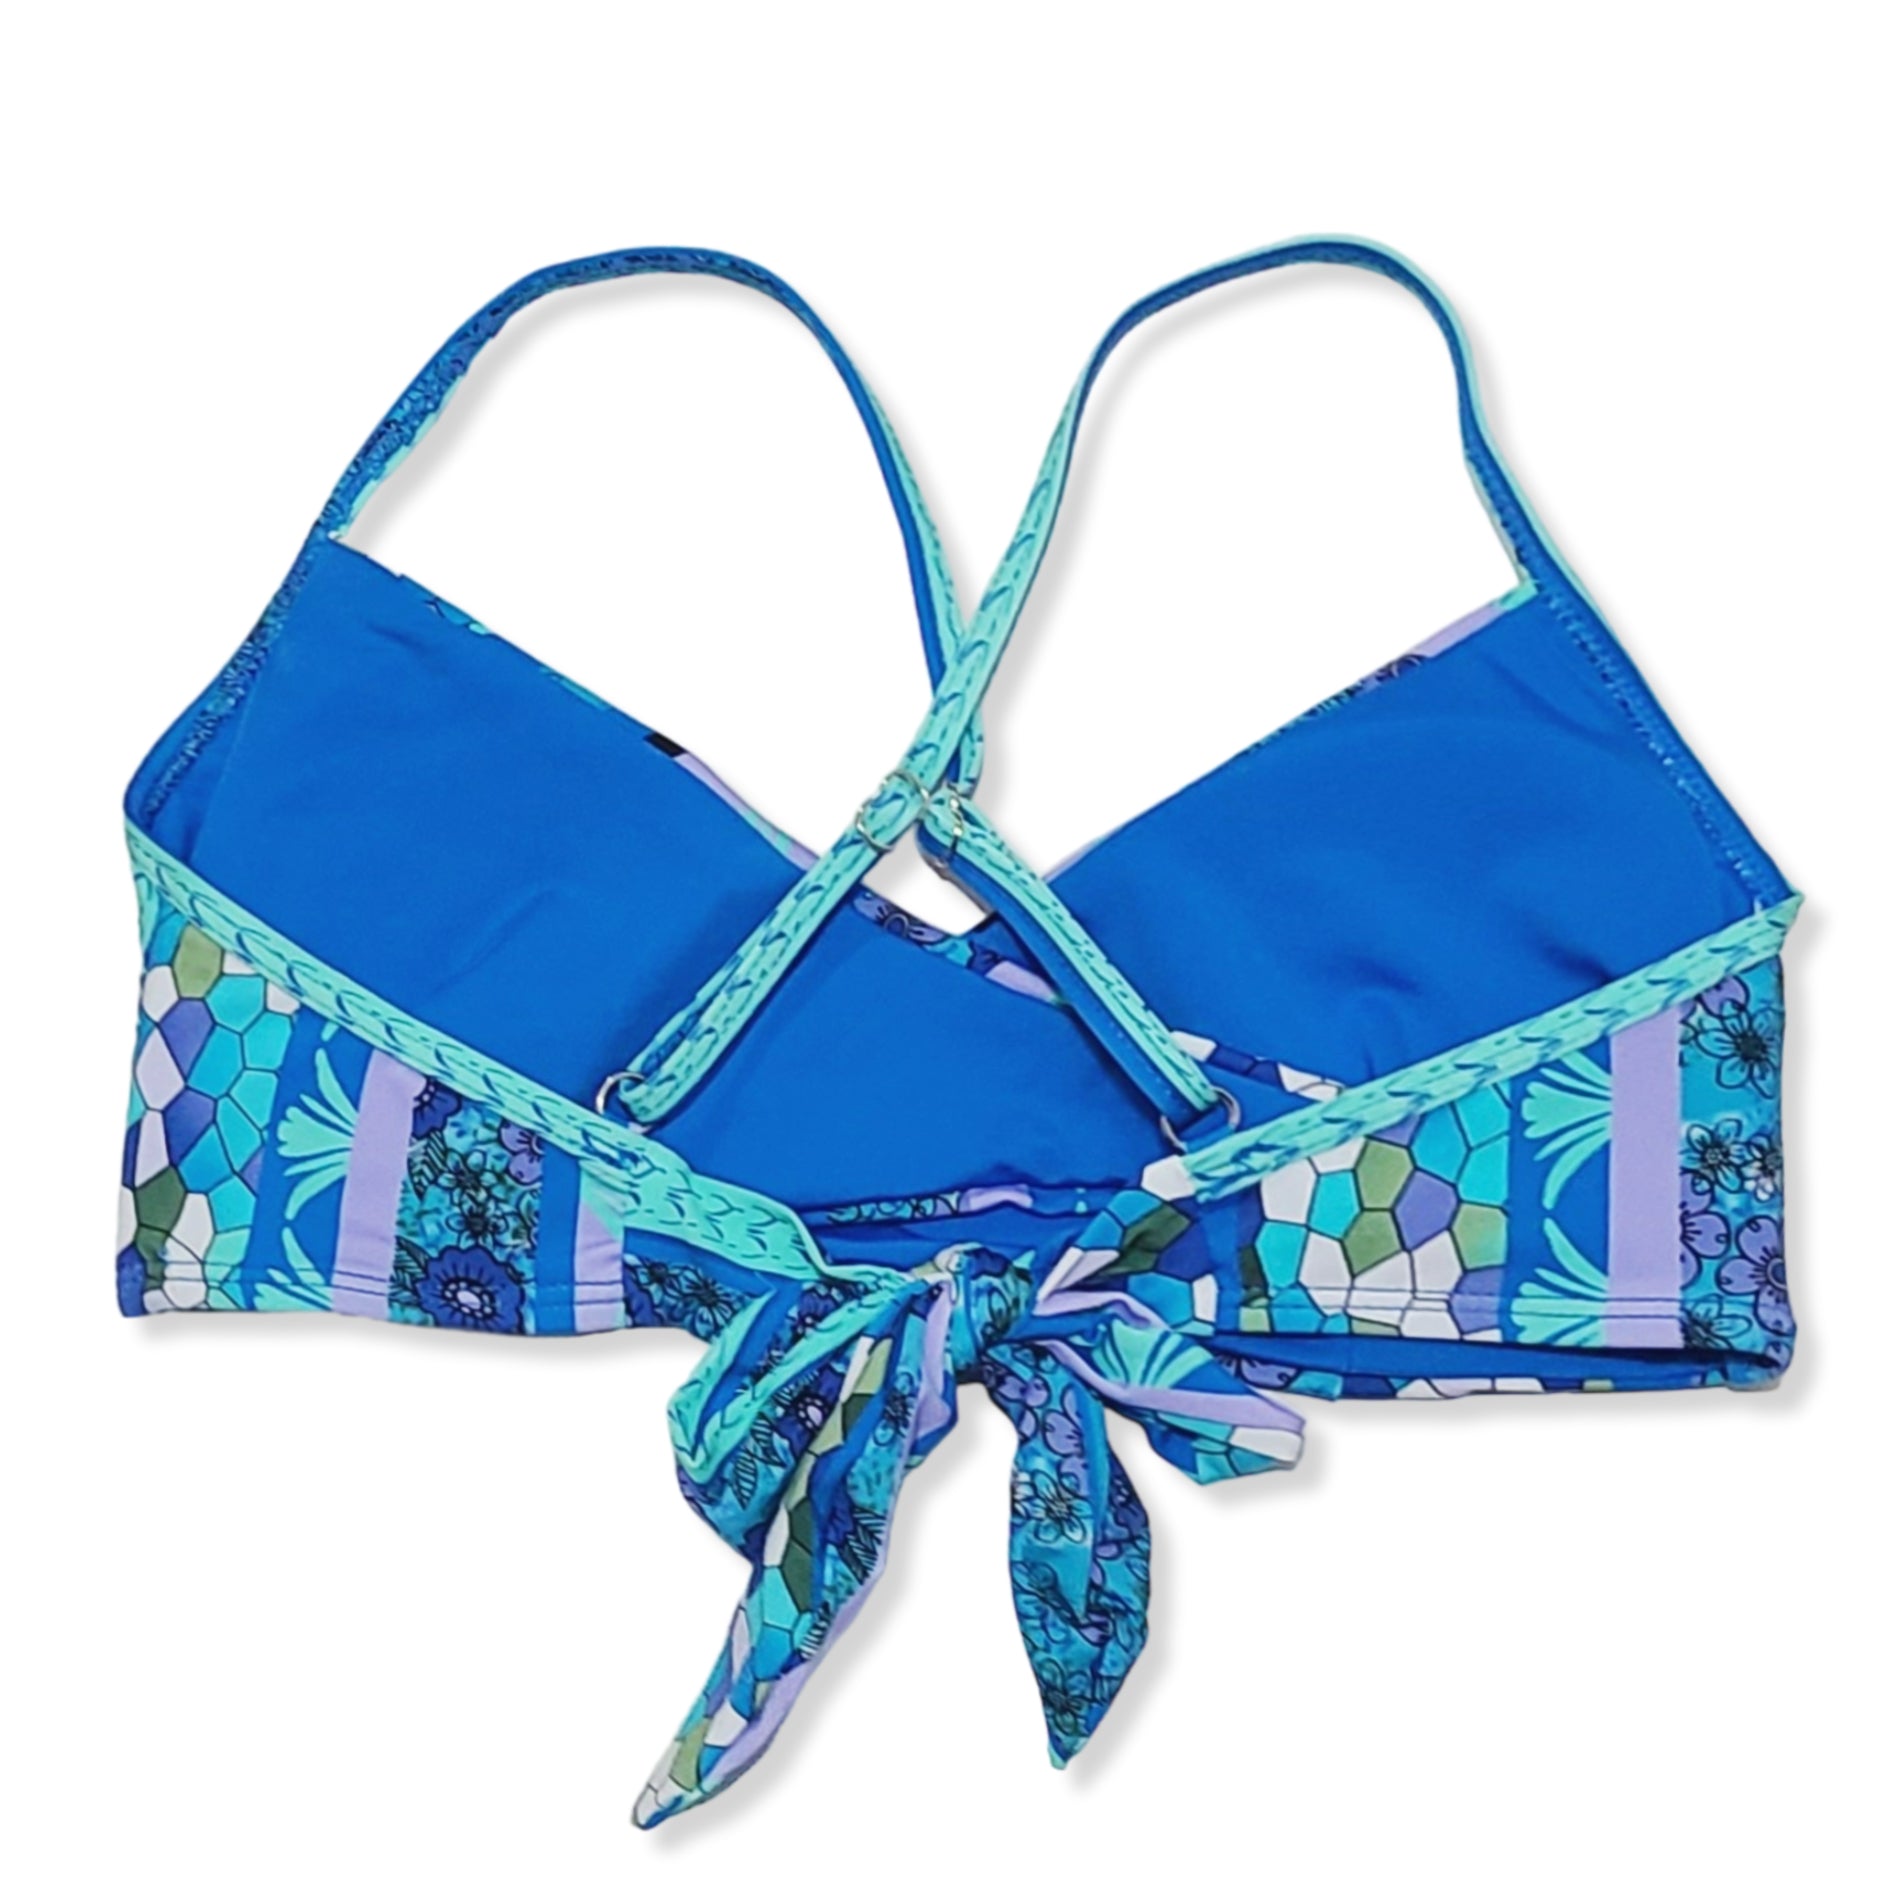 Lucky brand blue bohemian bikini, bottoms, size medium tops, size large